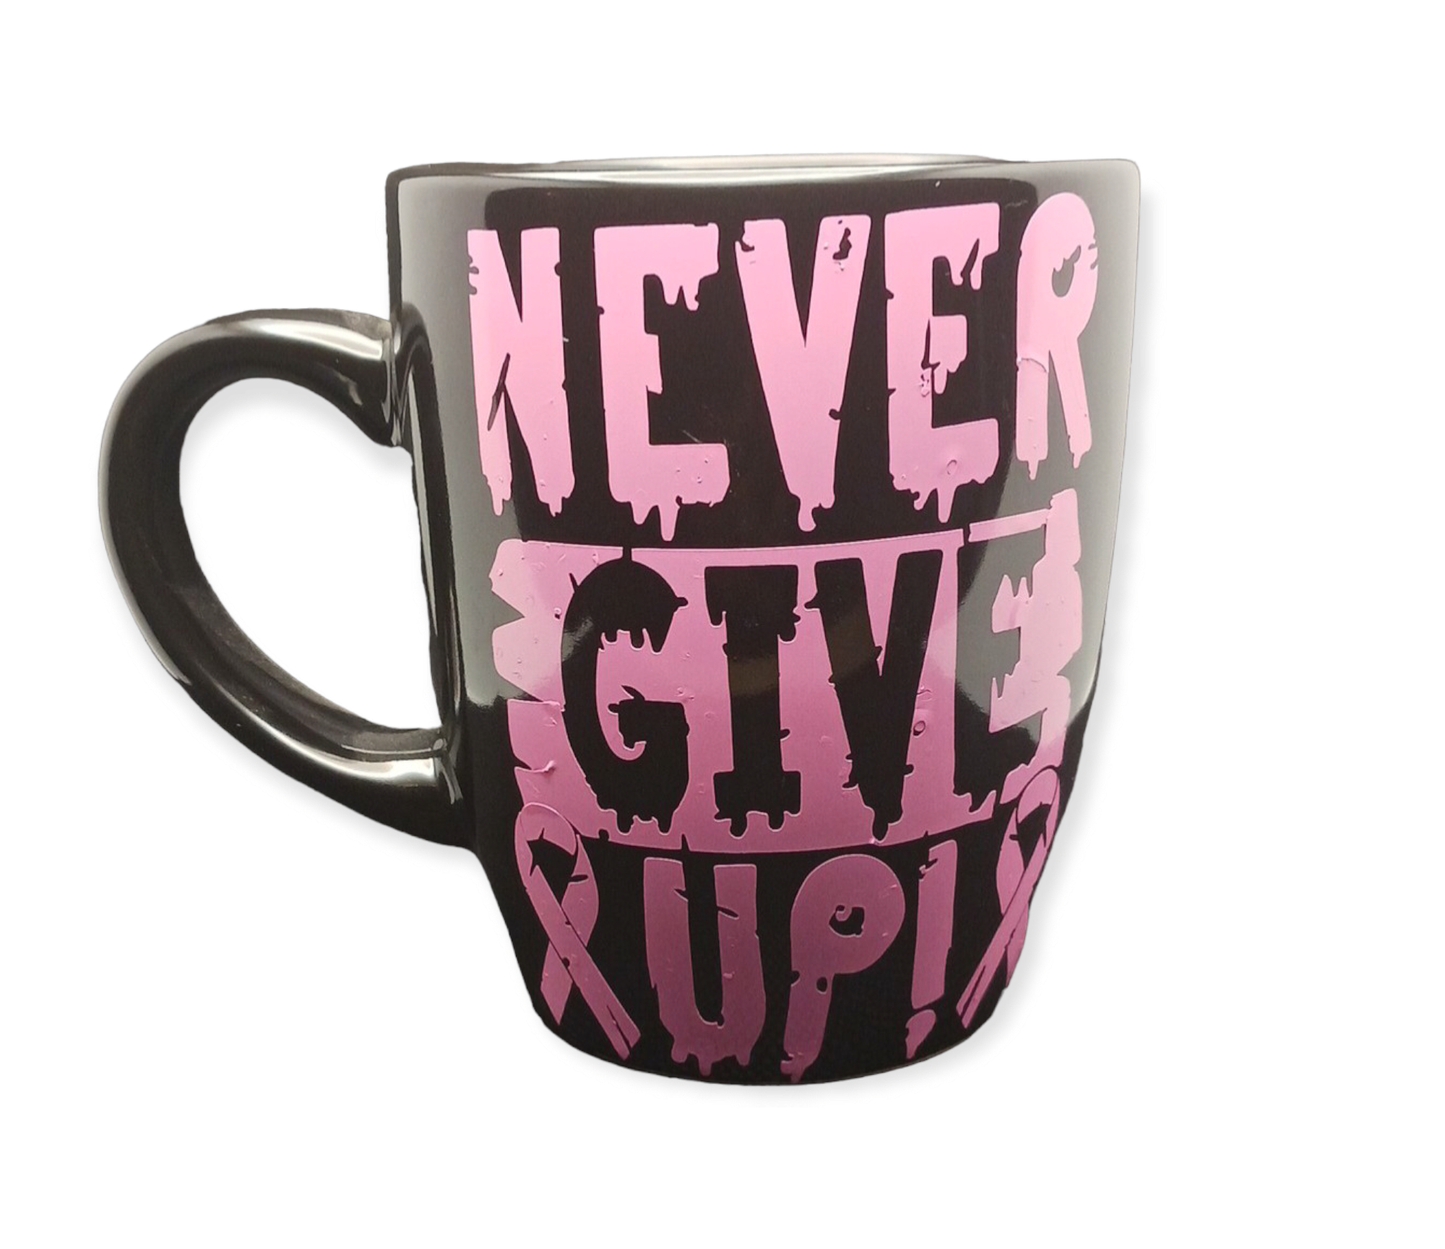 Never Give Up Ceramic Mug